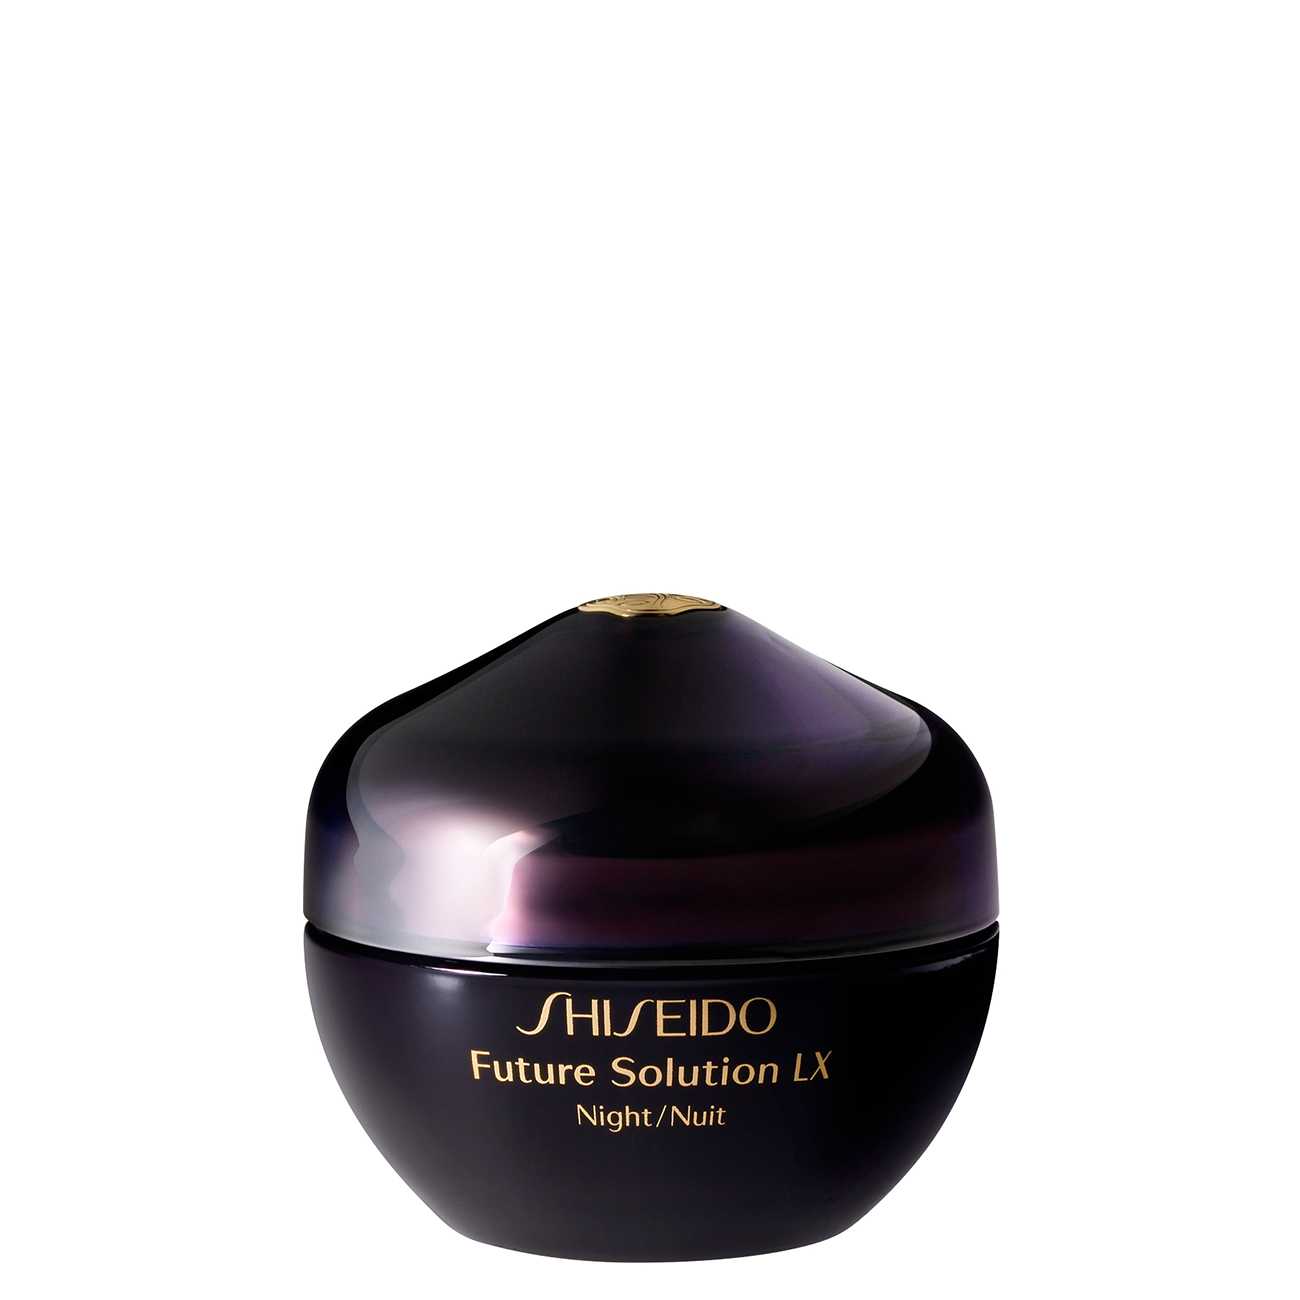 FUTURE SOLUTION LX Shiseido bestvalue.eu imagine noua